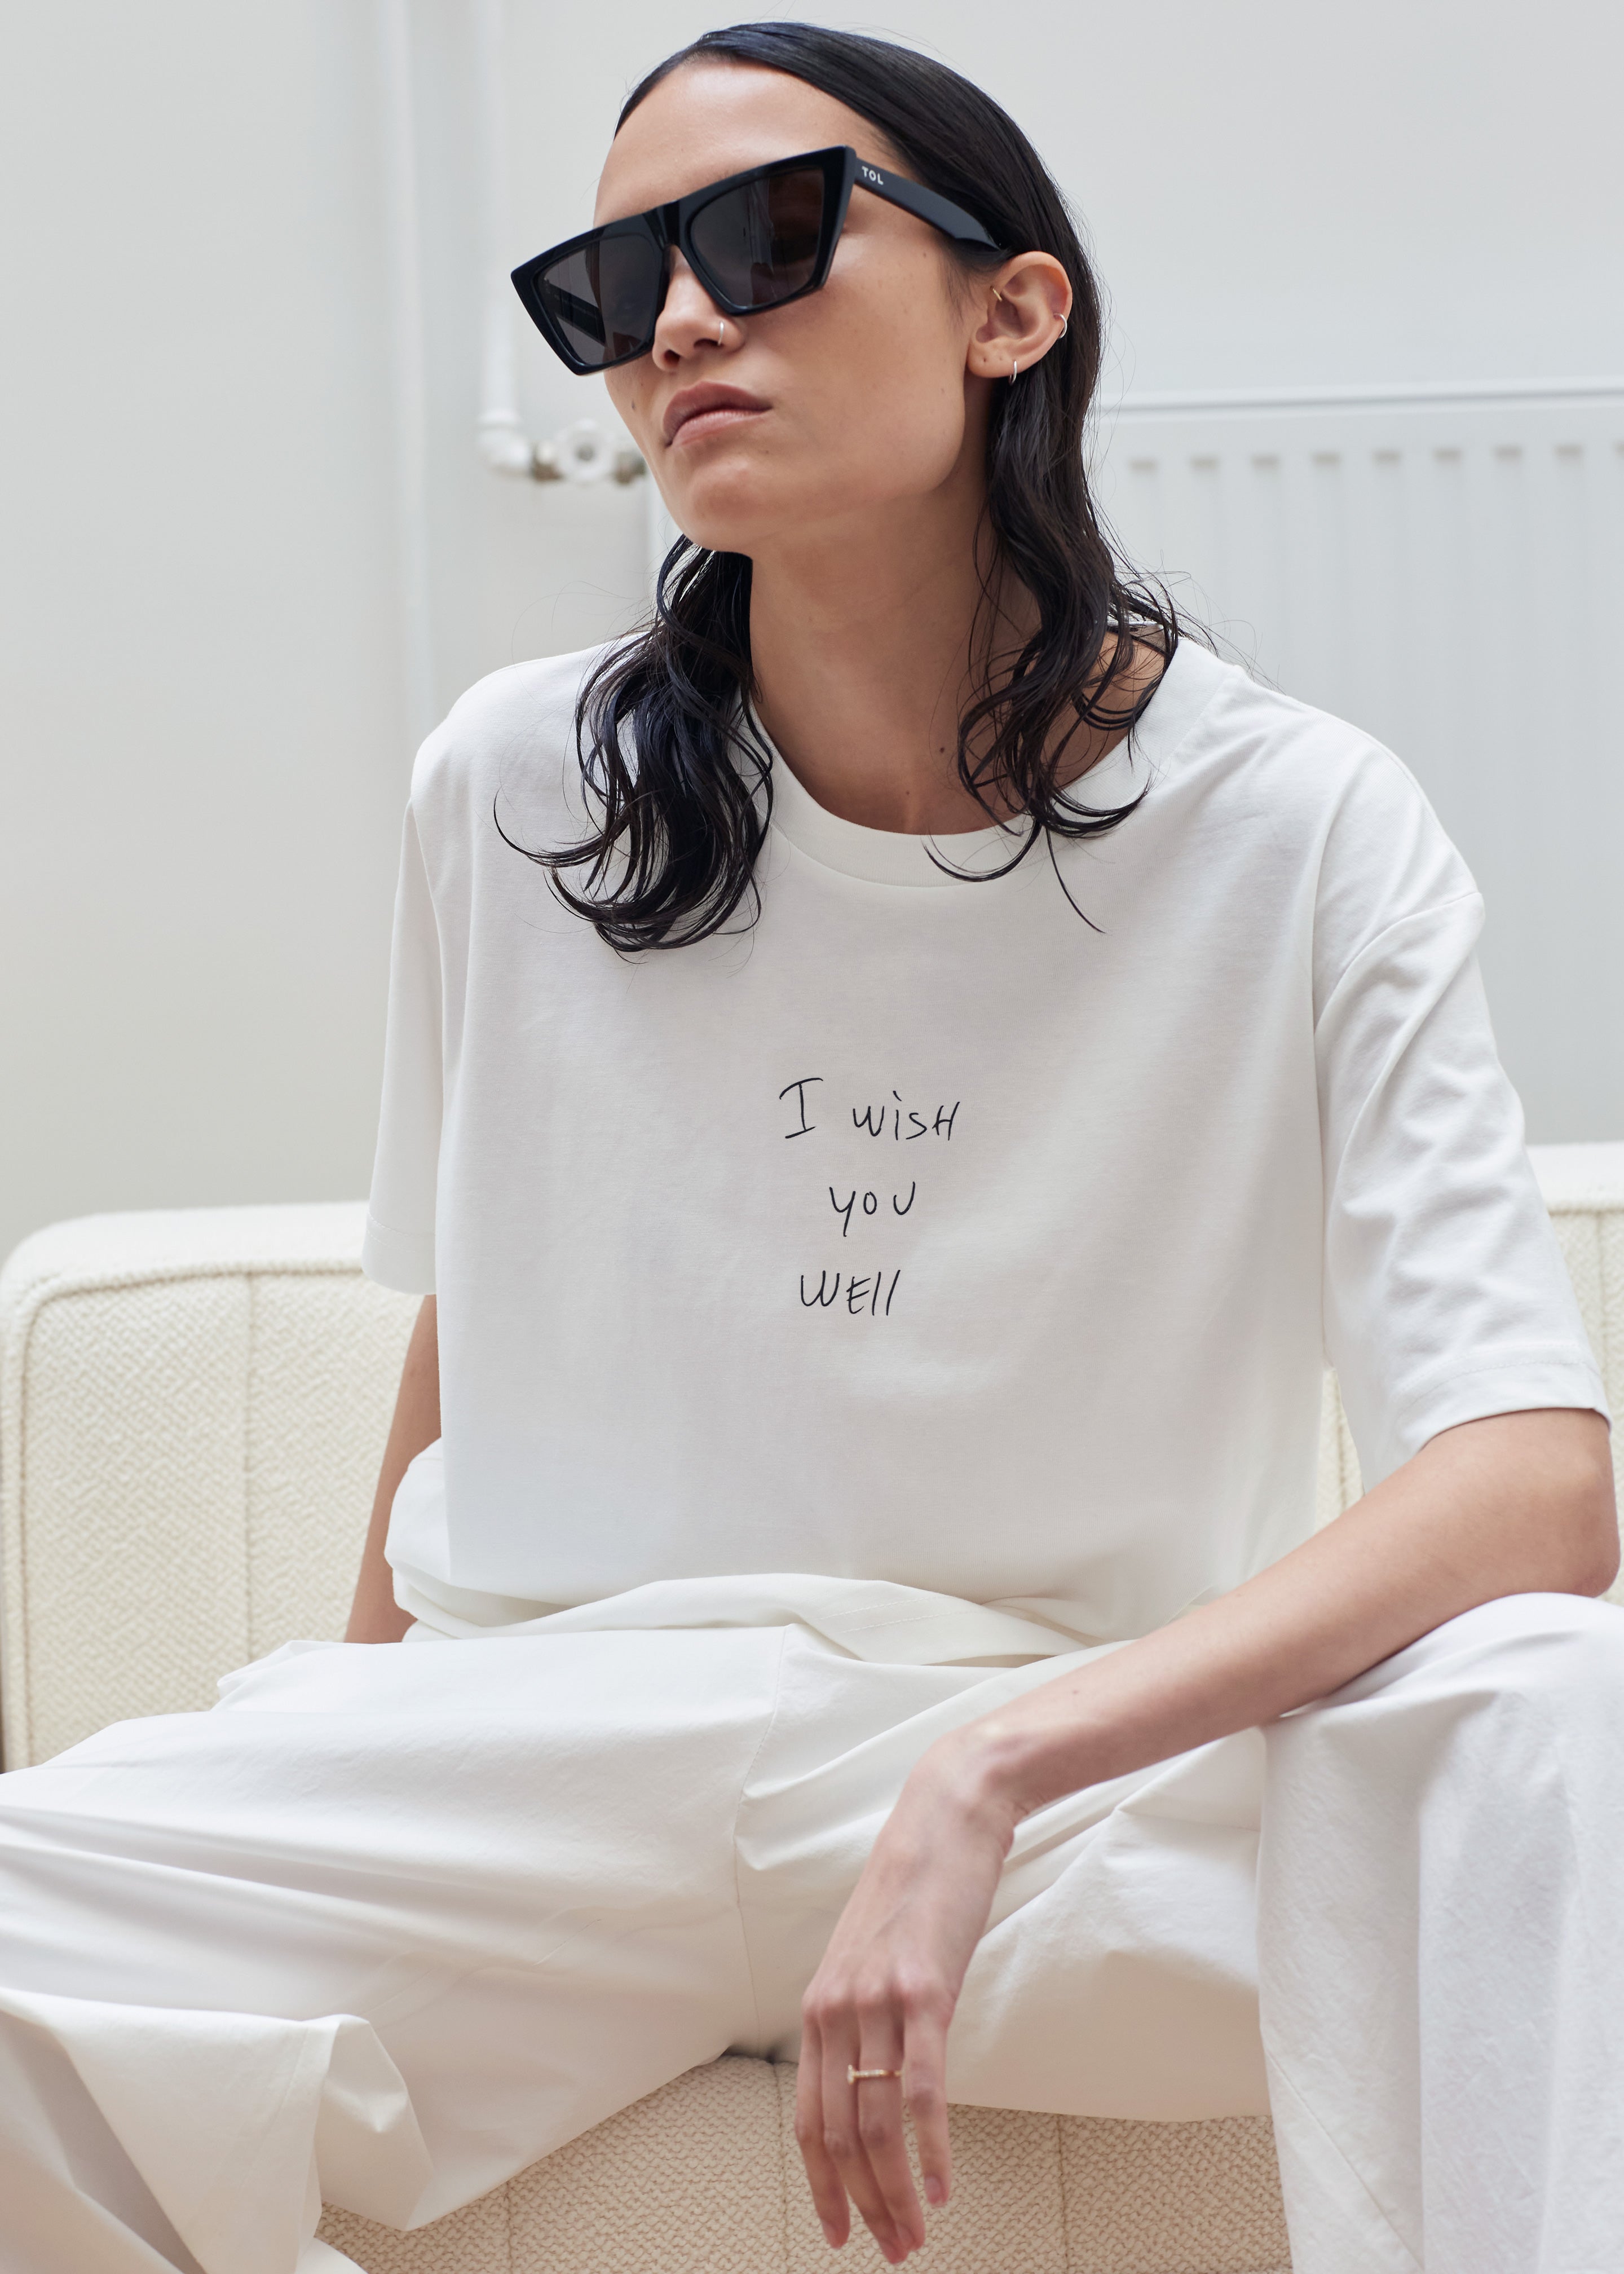 The Frankie Shop x Thomas Lélu Slope T-Shirt - Off White/Black - 1